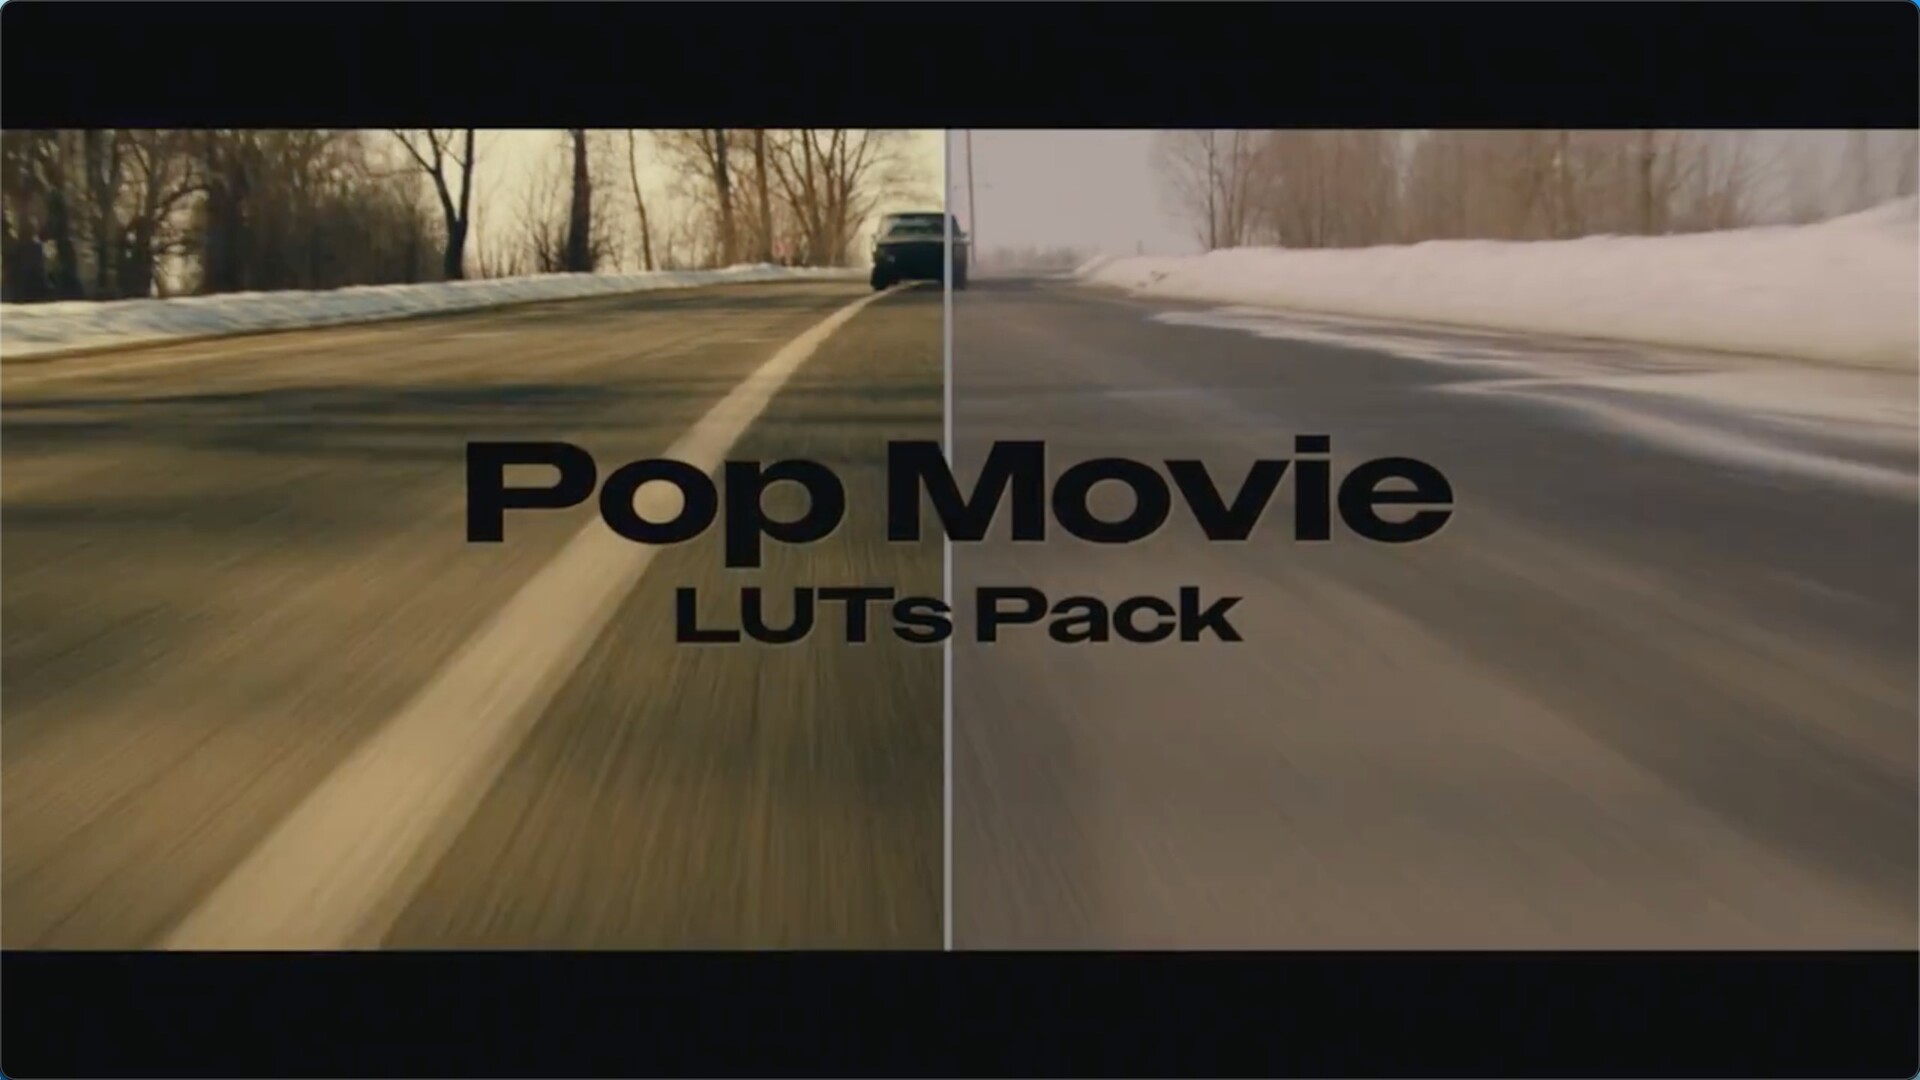 23个fcpx流行电影LUt预设 23 Pop Movie Look LUTs for Final Cut Pro